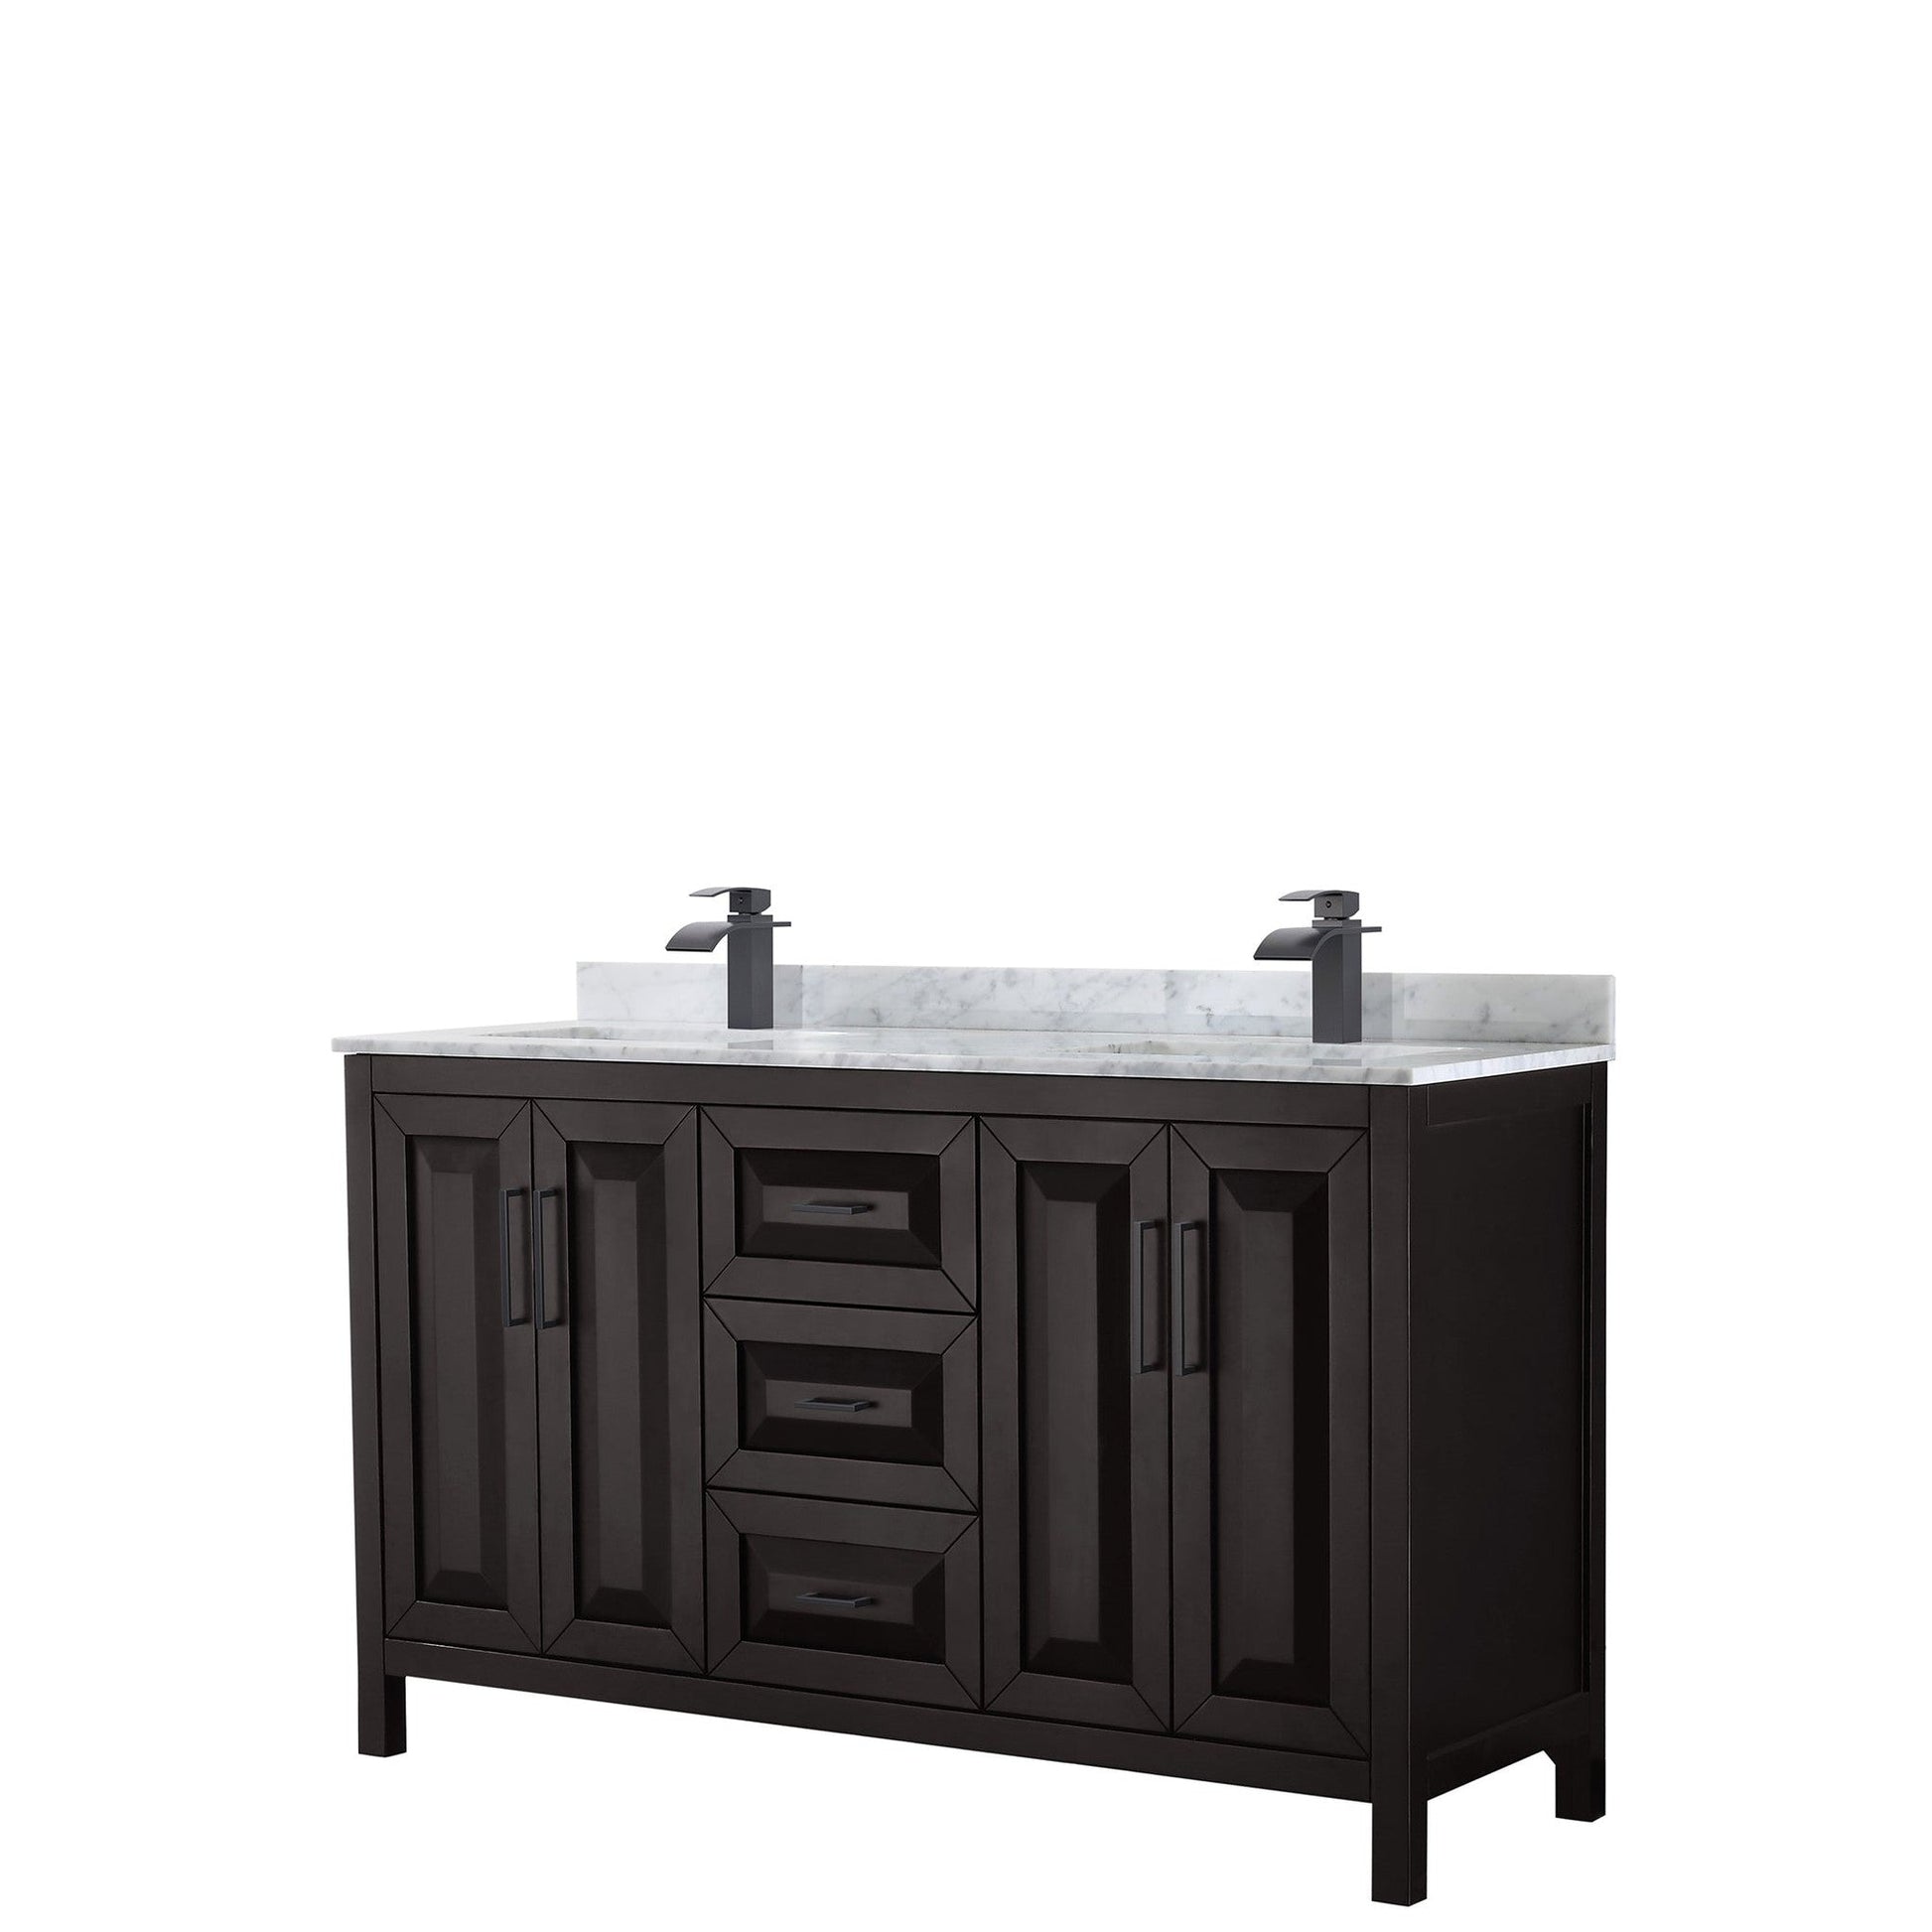 Daria 60" Double Bathroom Vanity in Dark Espresso, White Carrara Marble Countertop, Undermount Square Sinks, Matte Black Trim